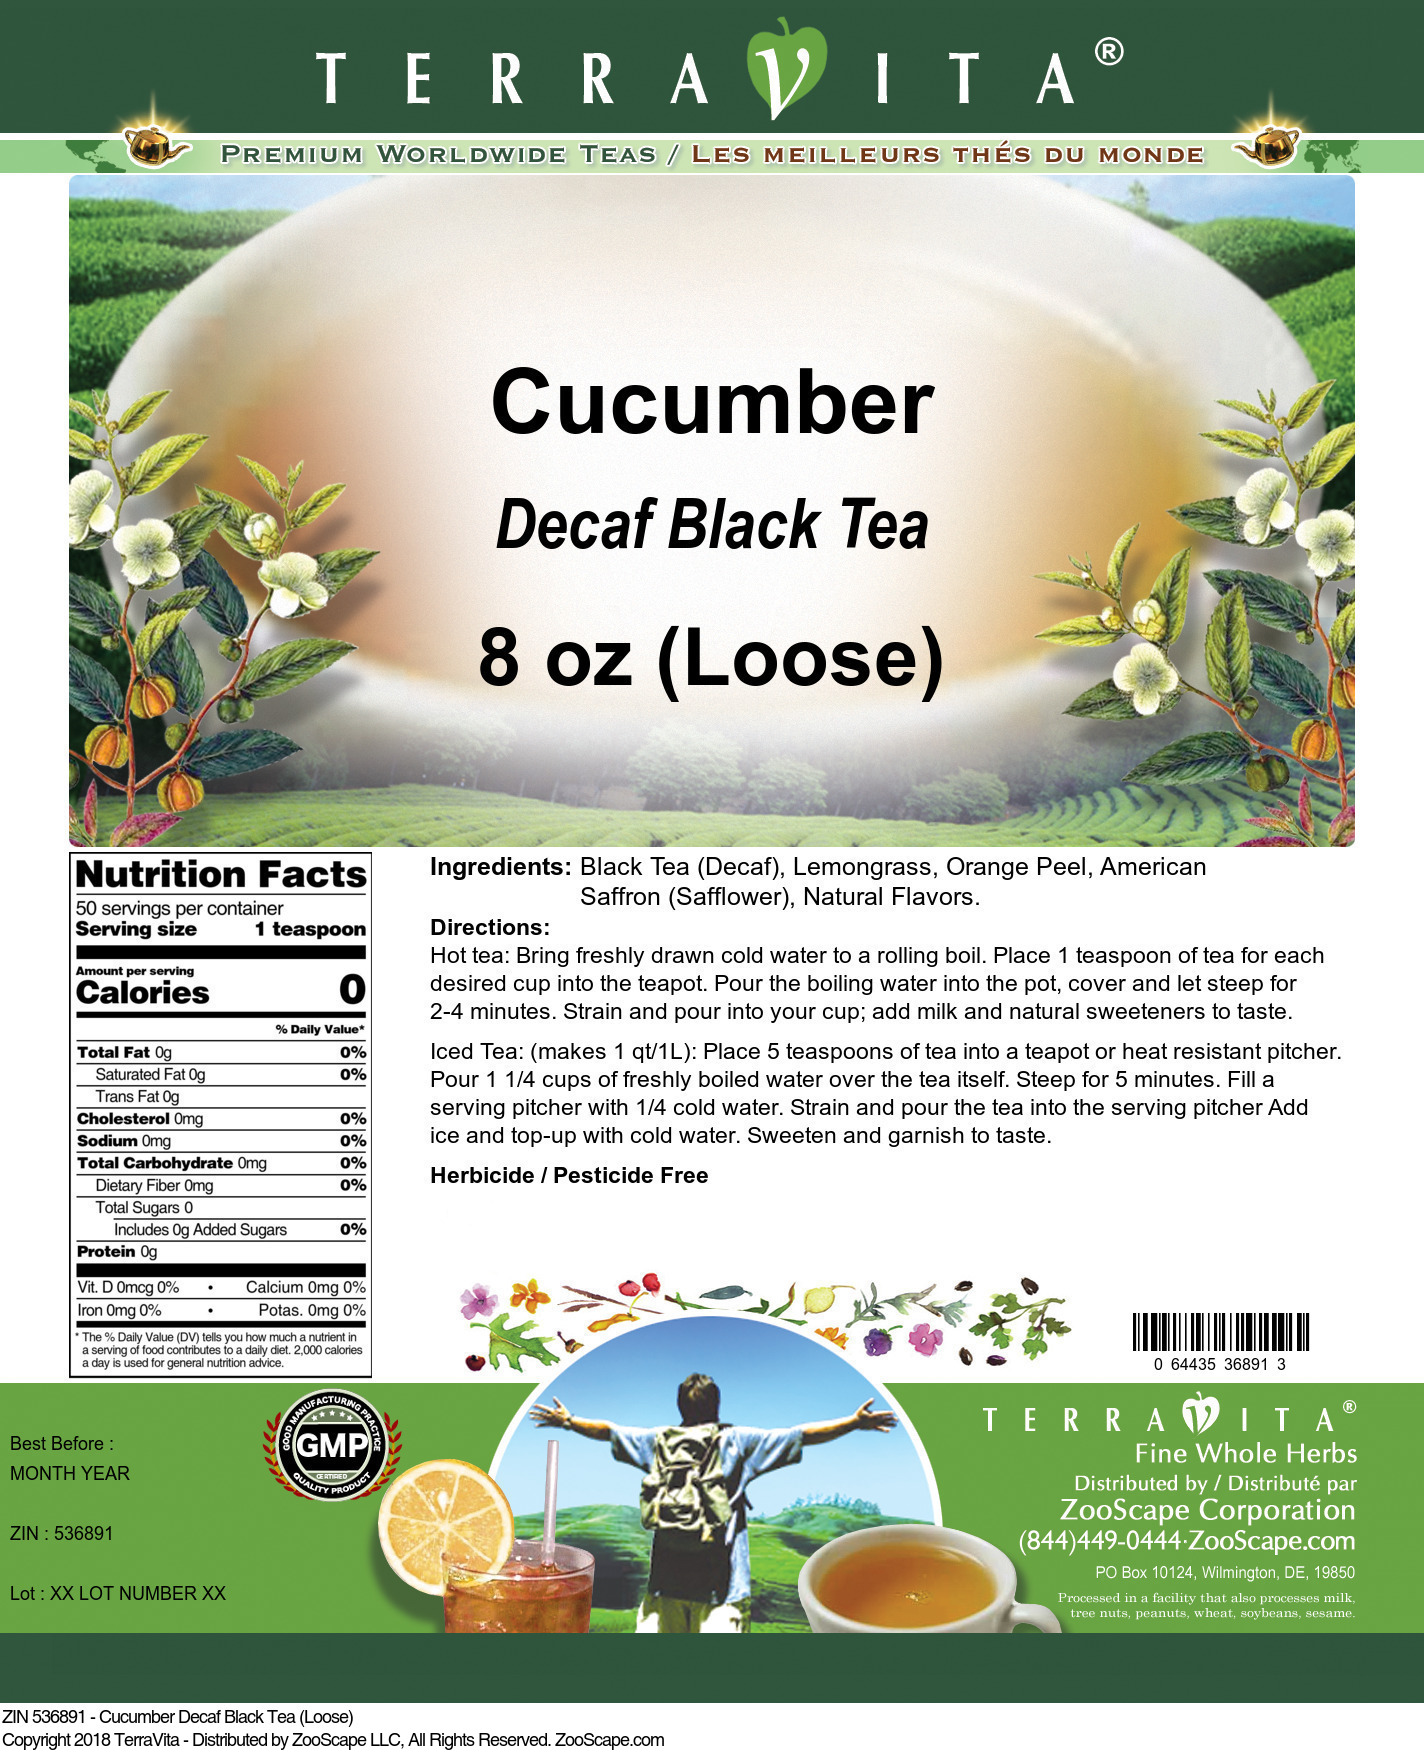 Cucumber Decaf Black Tea (Loose) - Label